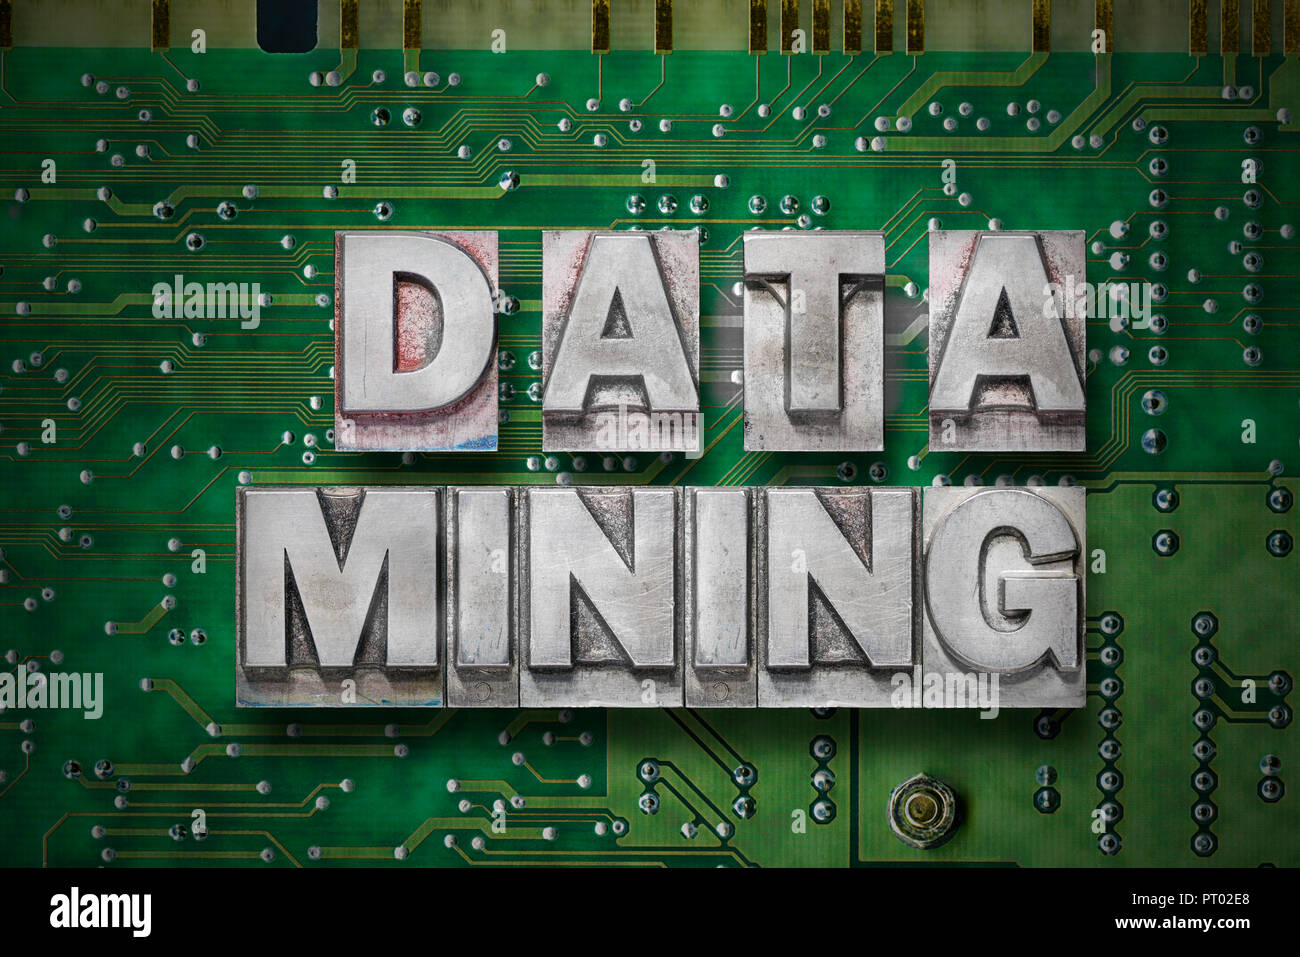 data mining phrase made from metallic letterpress blocks on the pc board background Stock Photo